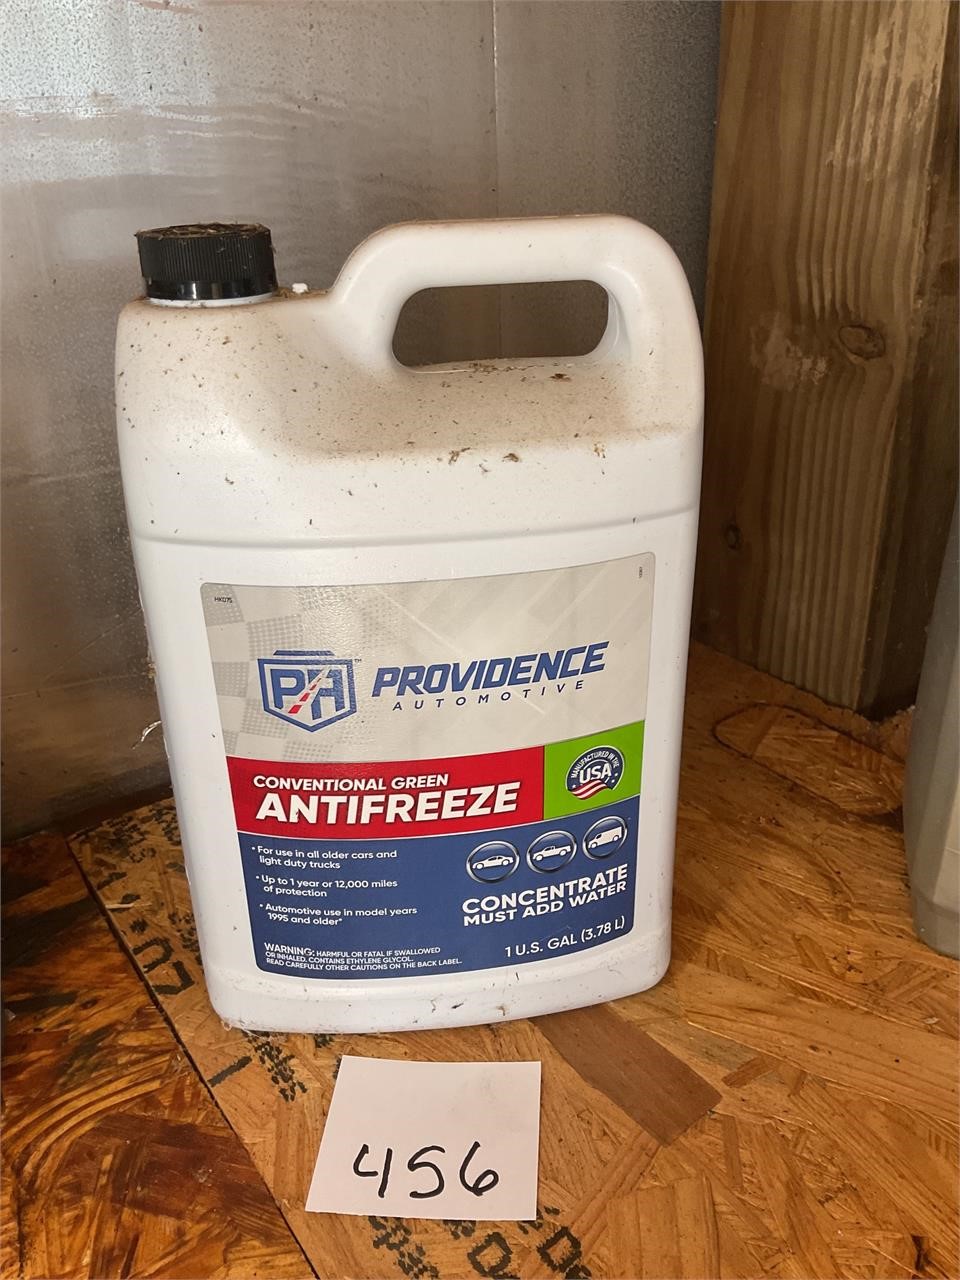 1 gallon of antifreeze